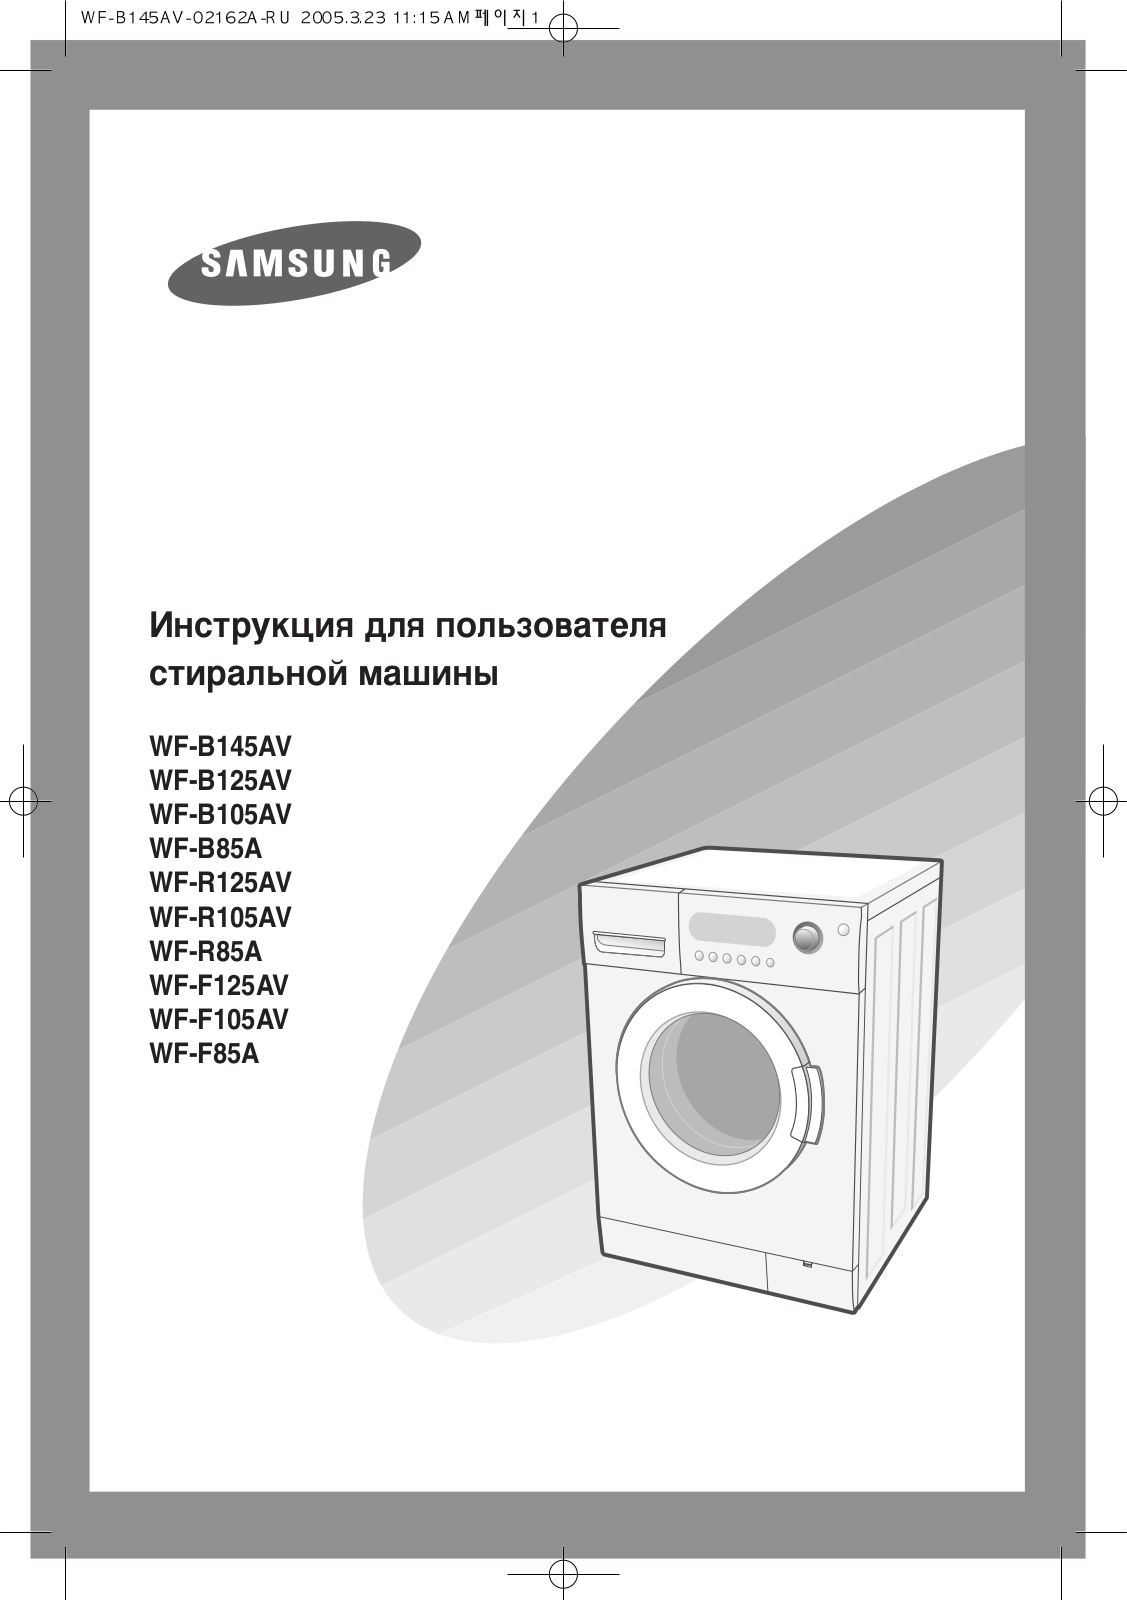 Samsung WF-R85A, WF-R125AV, WF-R105AV, WF-F85A, WF-F125AV User Manual